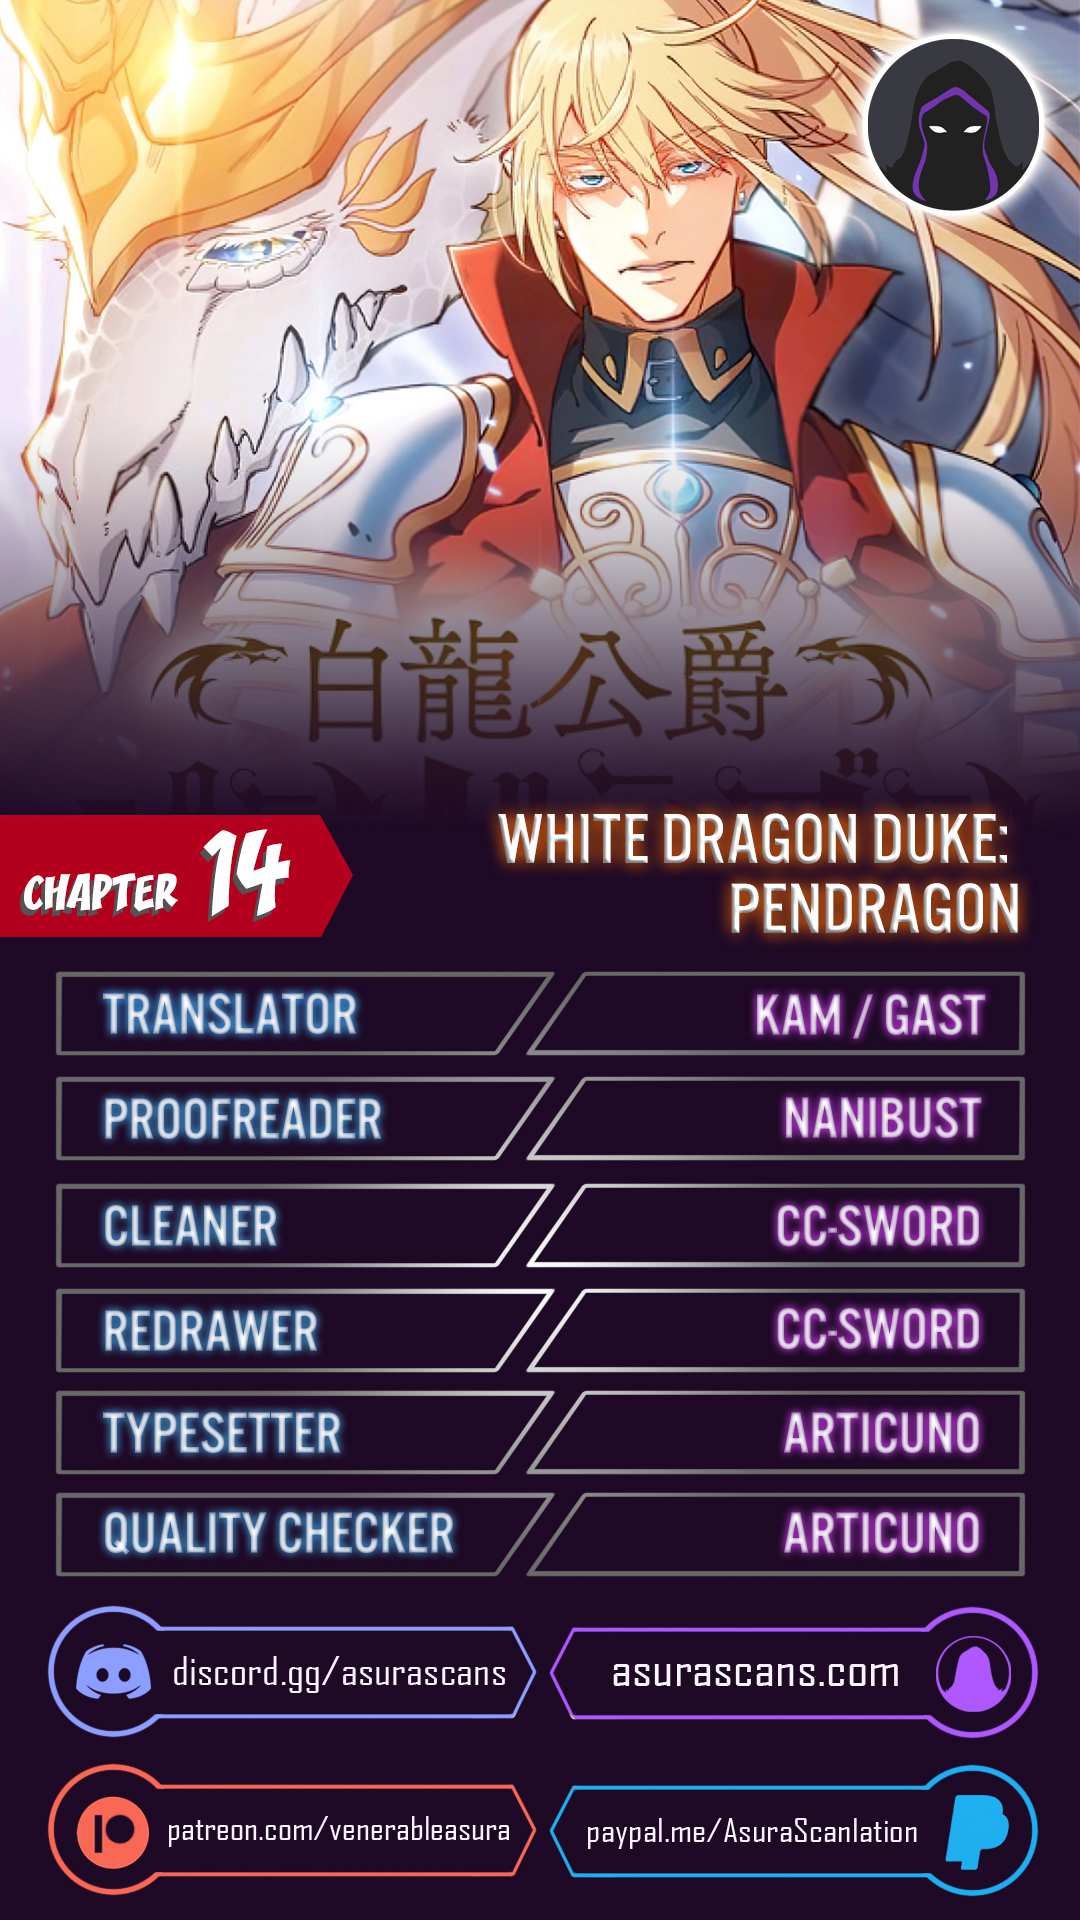 White Dragon Duke: Pendragon chapter 14